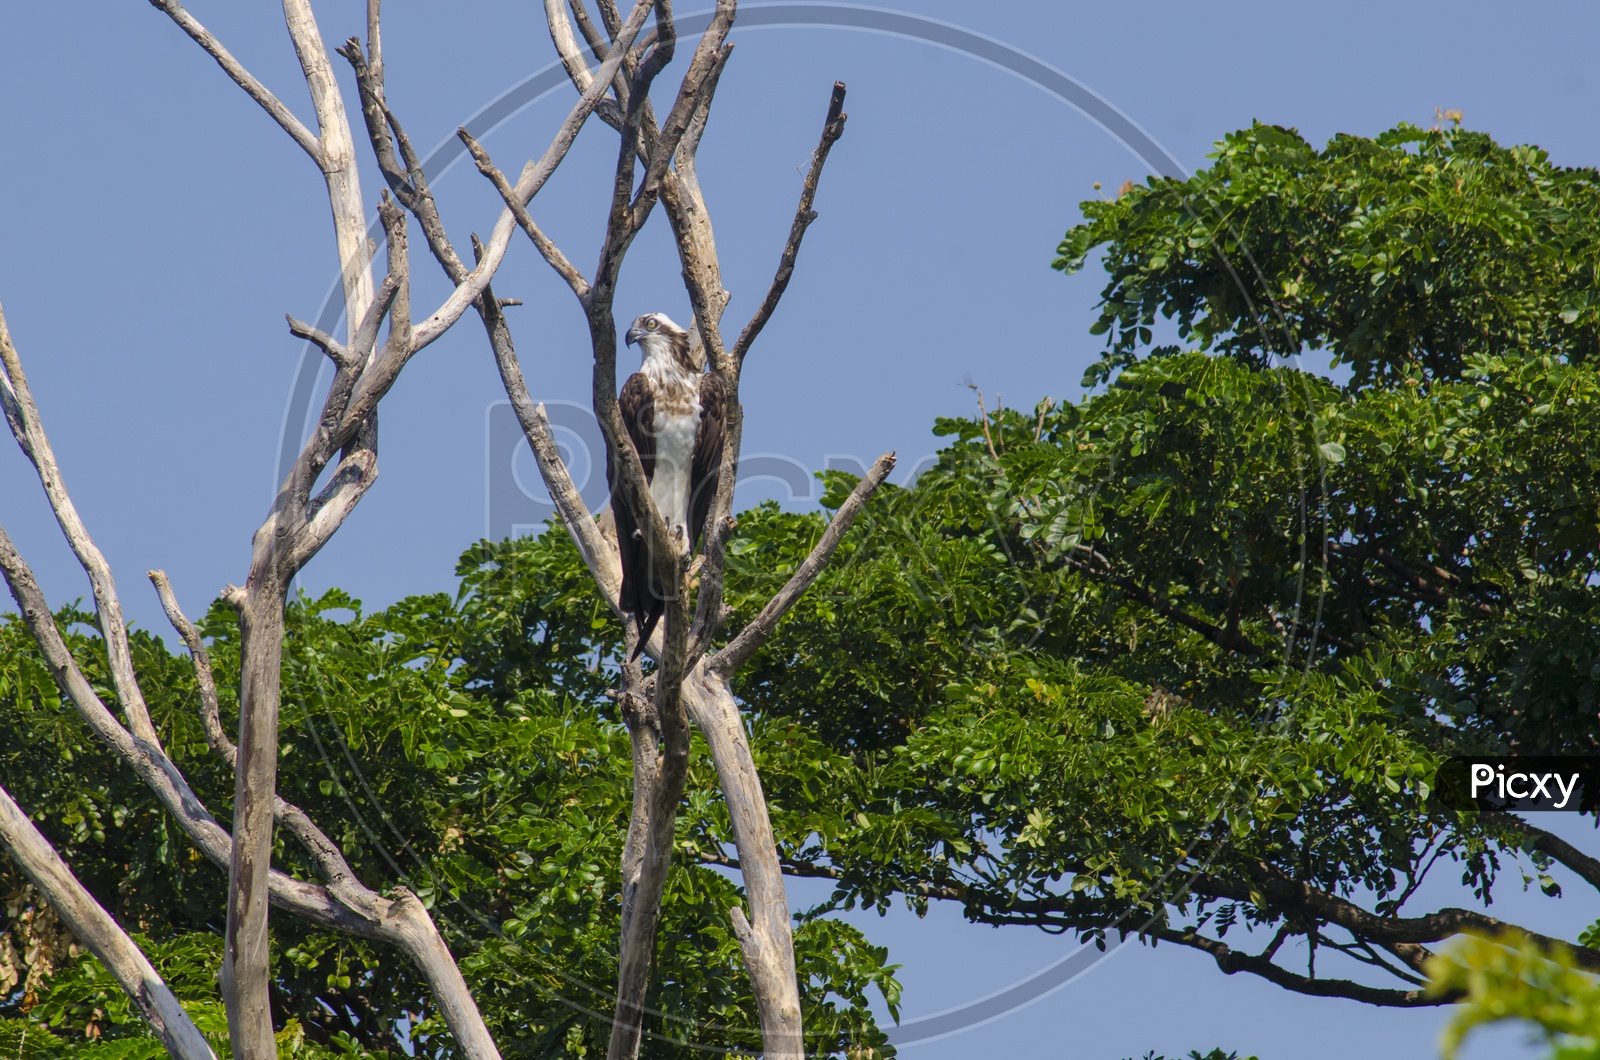 An Osprey on the tree